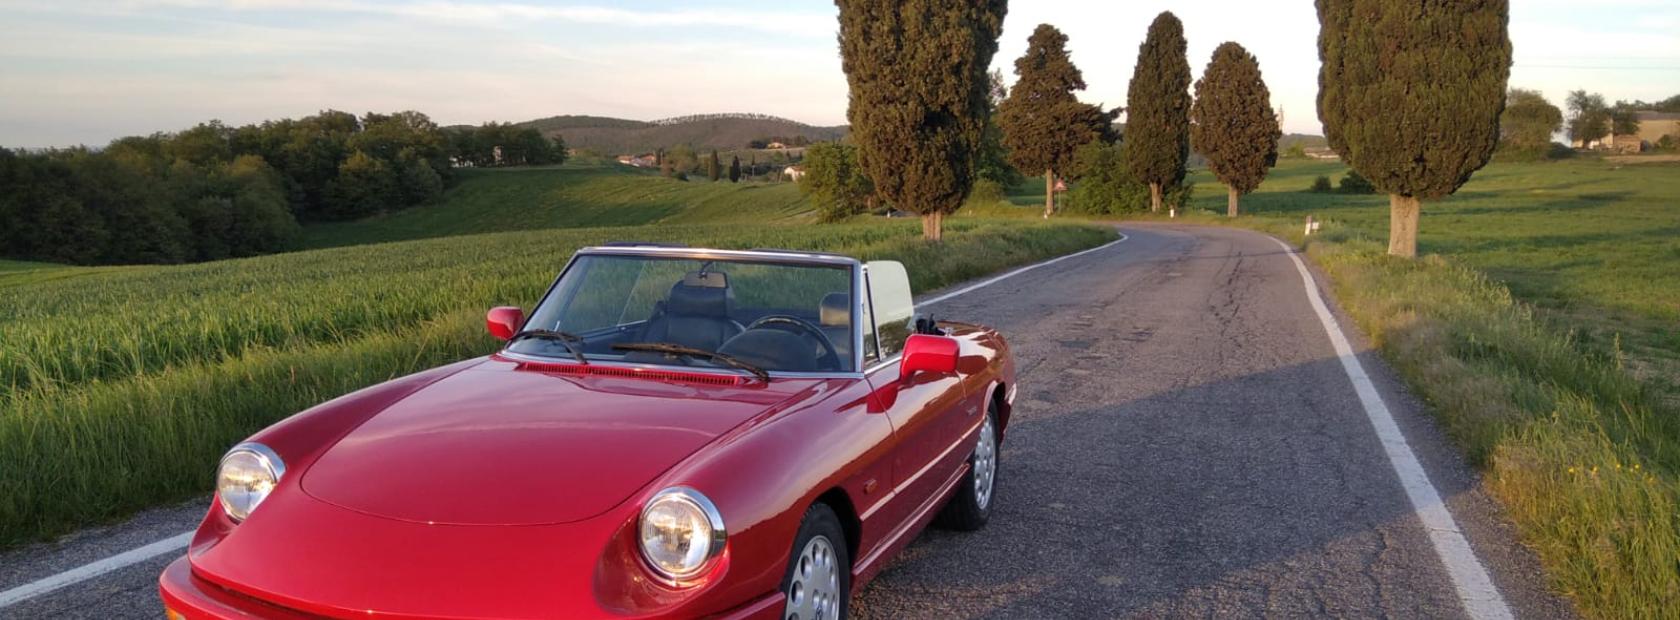 Noleggio auto epoca a Montepulciano: Duetto Spider Alfa Romeo rossa